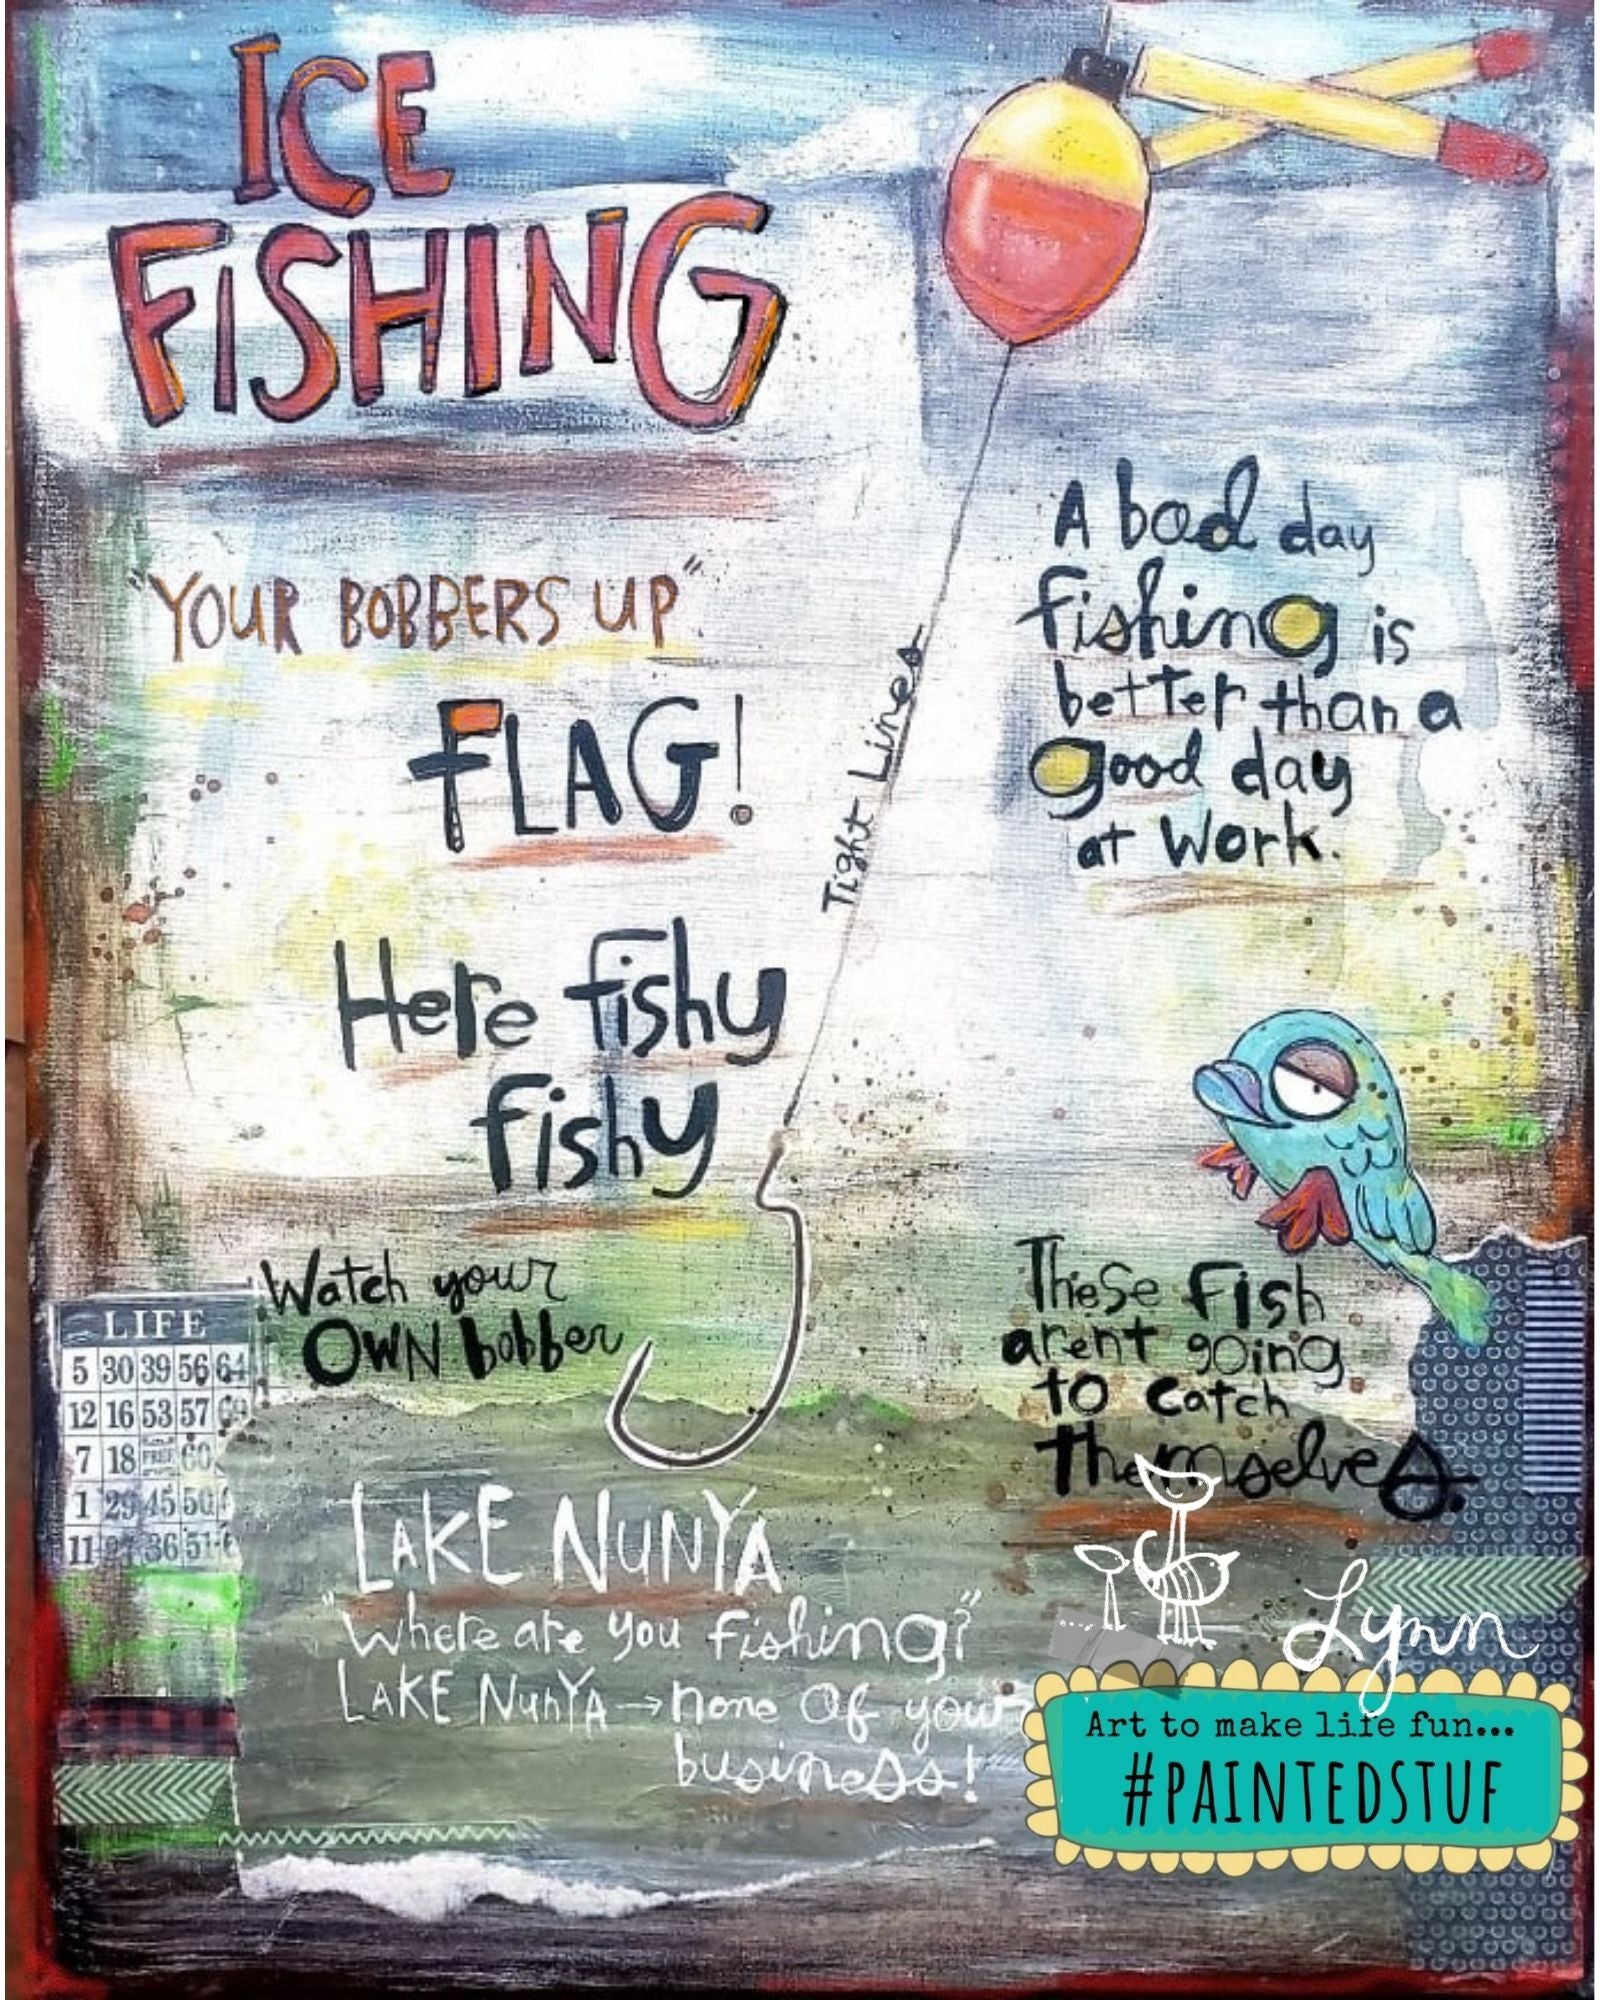 Print New! Ice Fishing – Painted Stuf